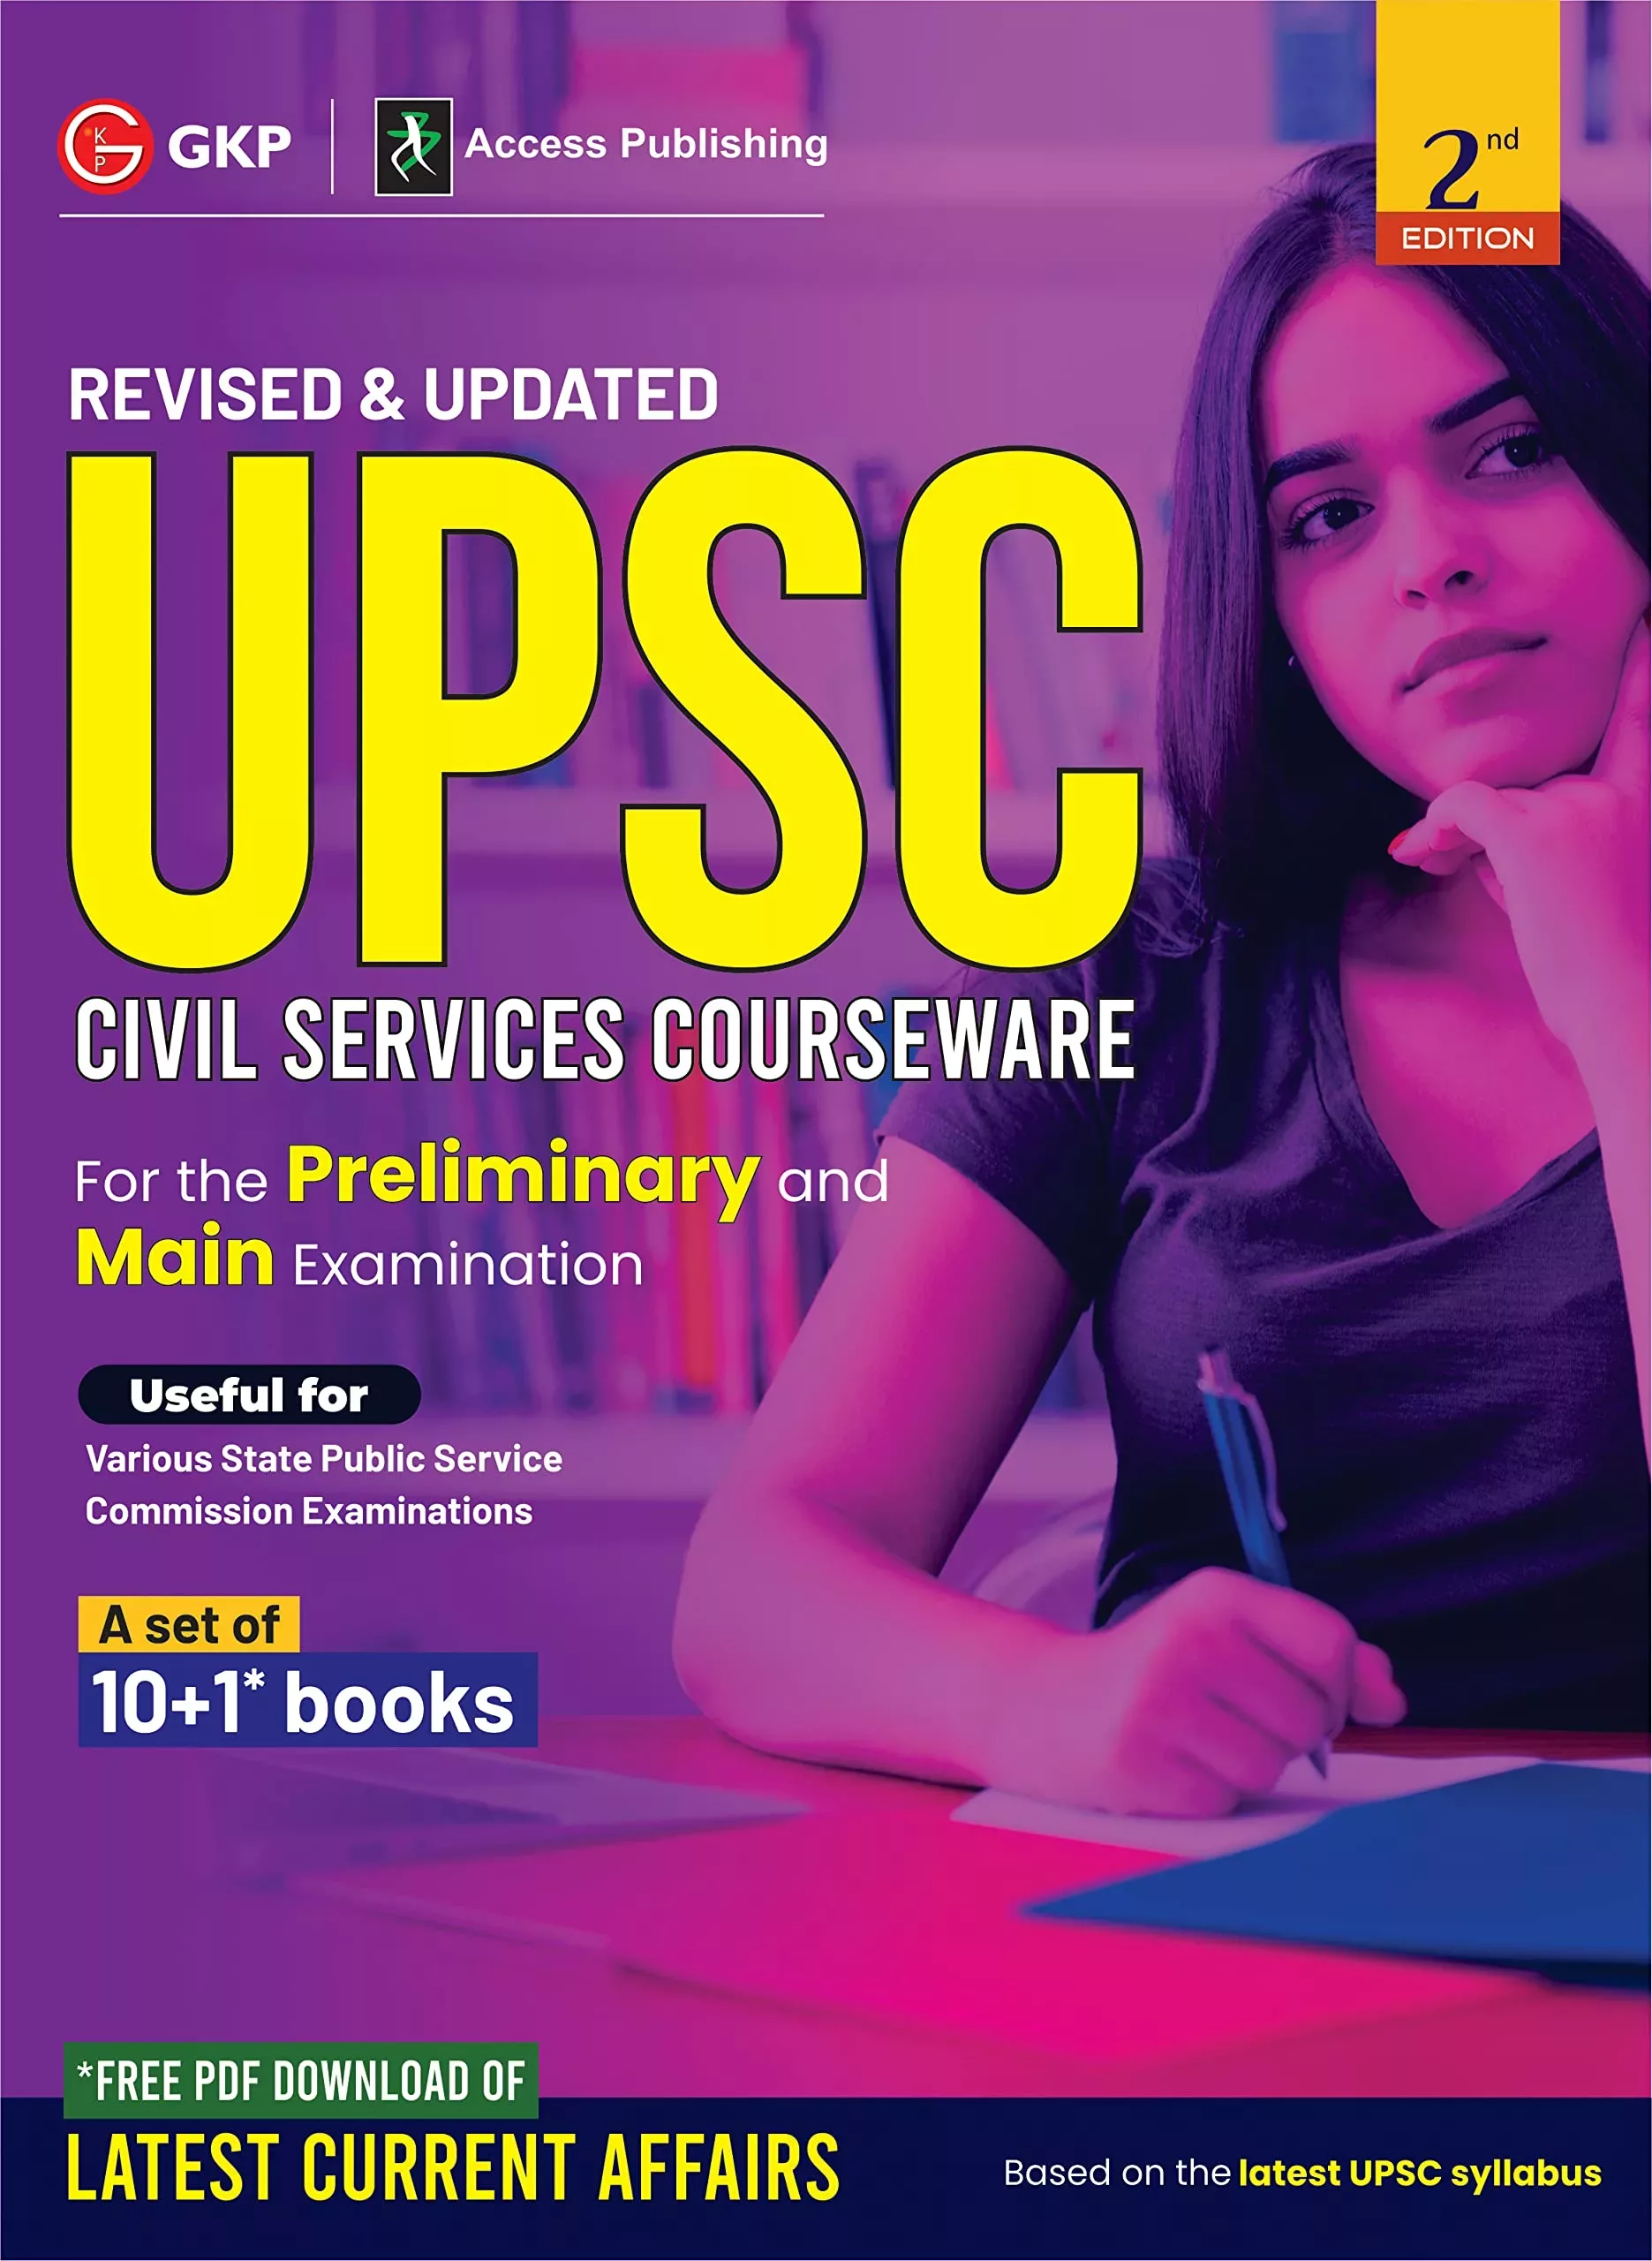 UPSC Civil Services Courseware for Prelims & Mains Examinations